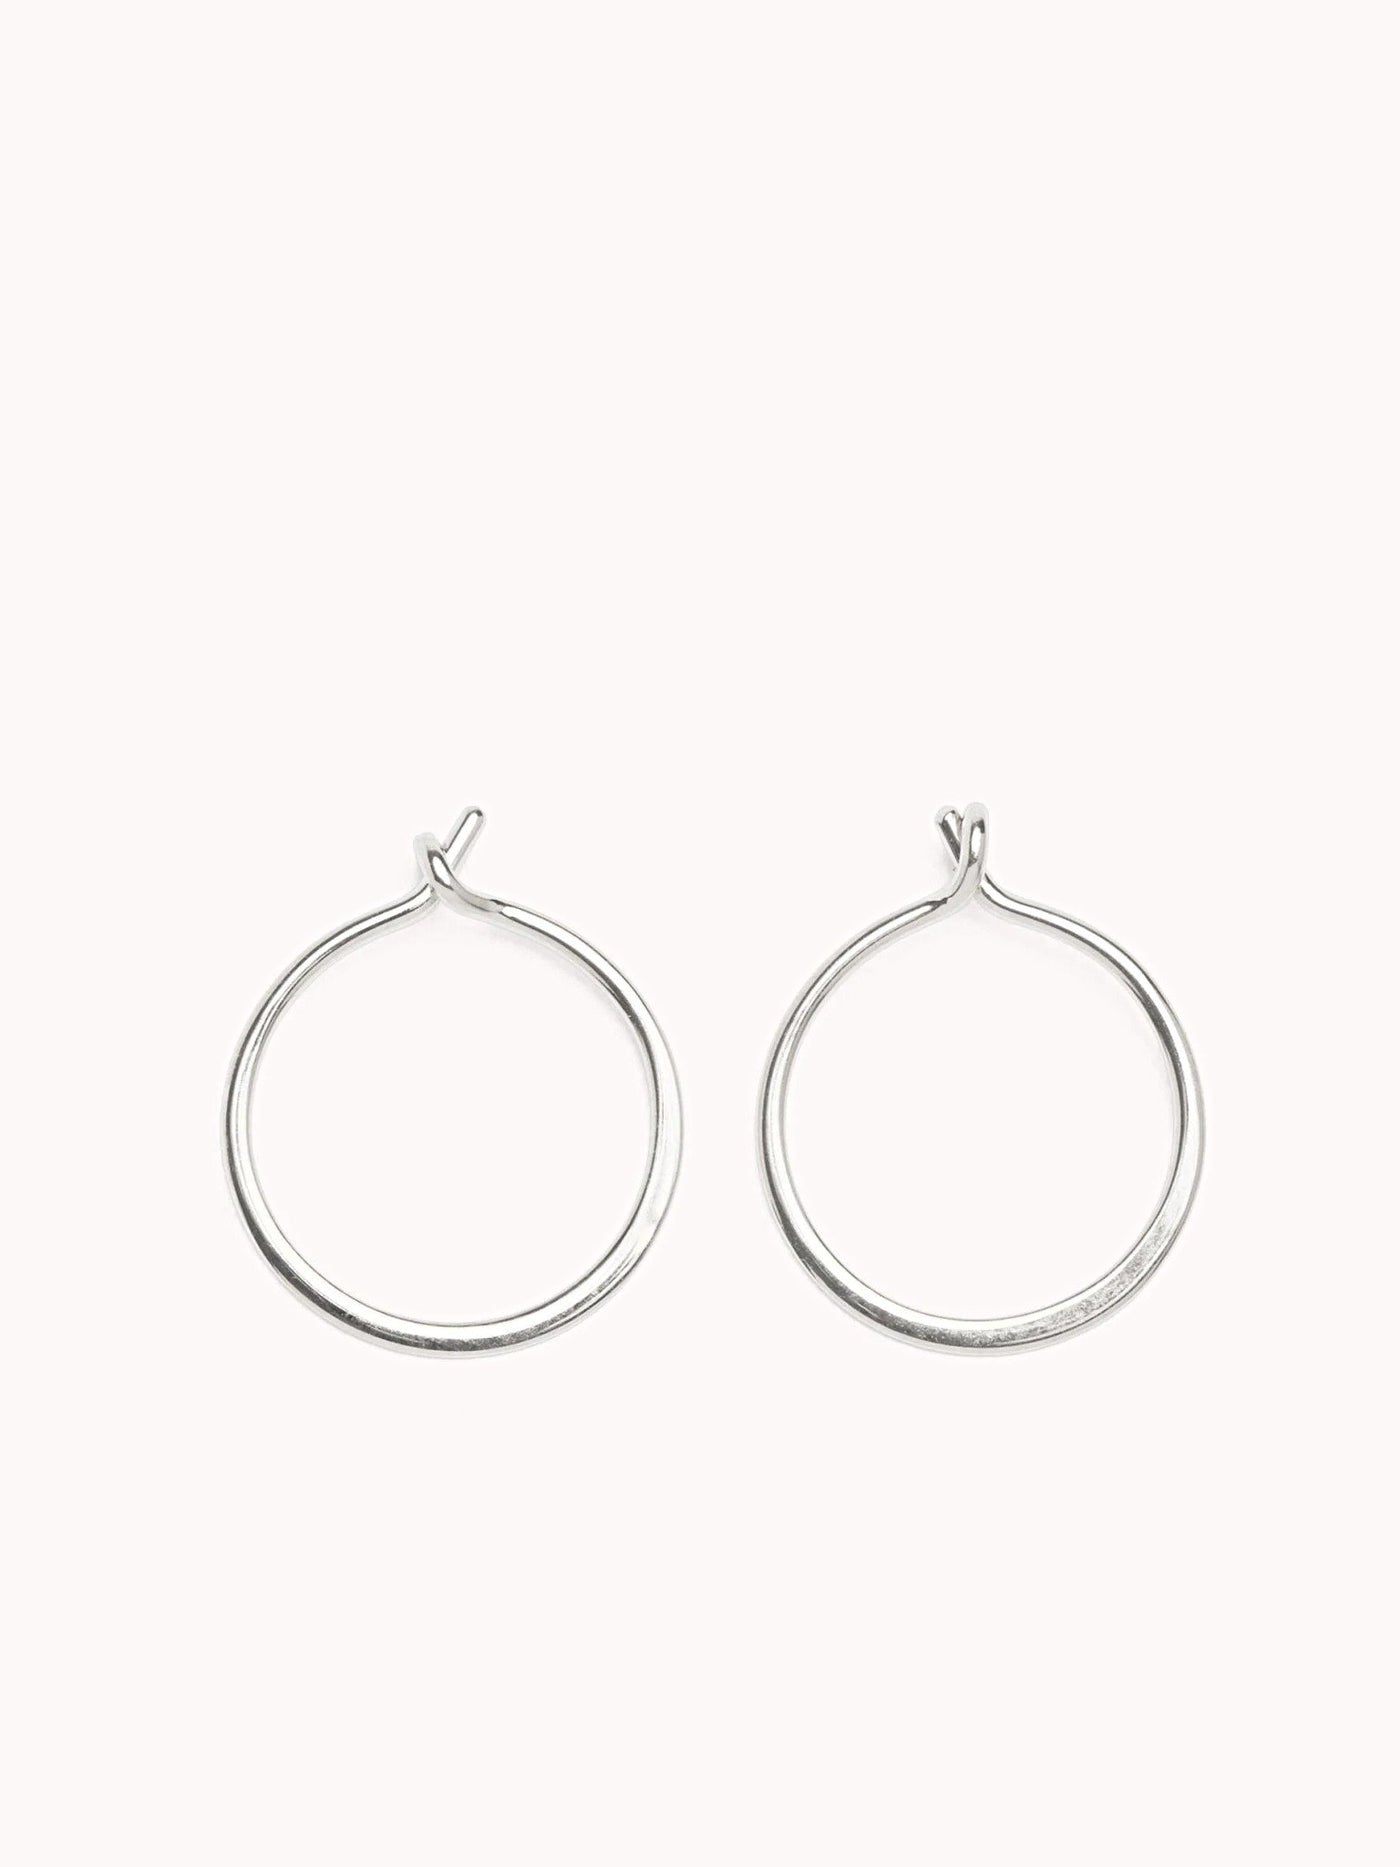 Deepa Hoop Earrings - 925 Sterling SilverBackUpItemsBlack Friday JewelryLunai Jewelry